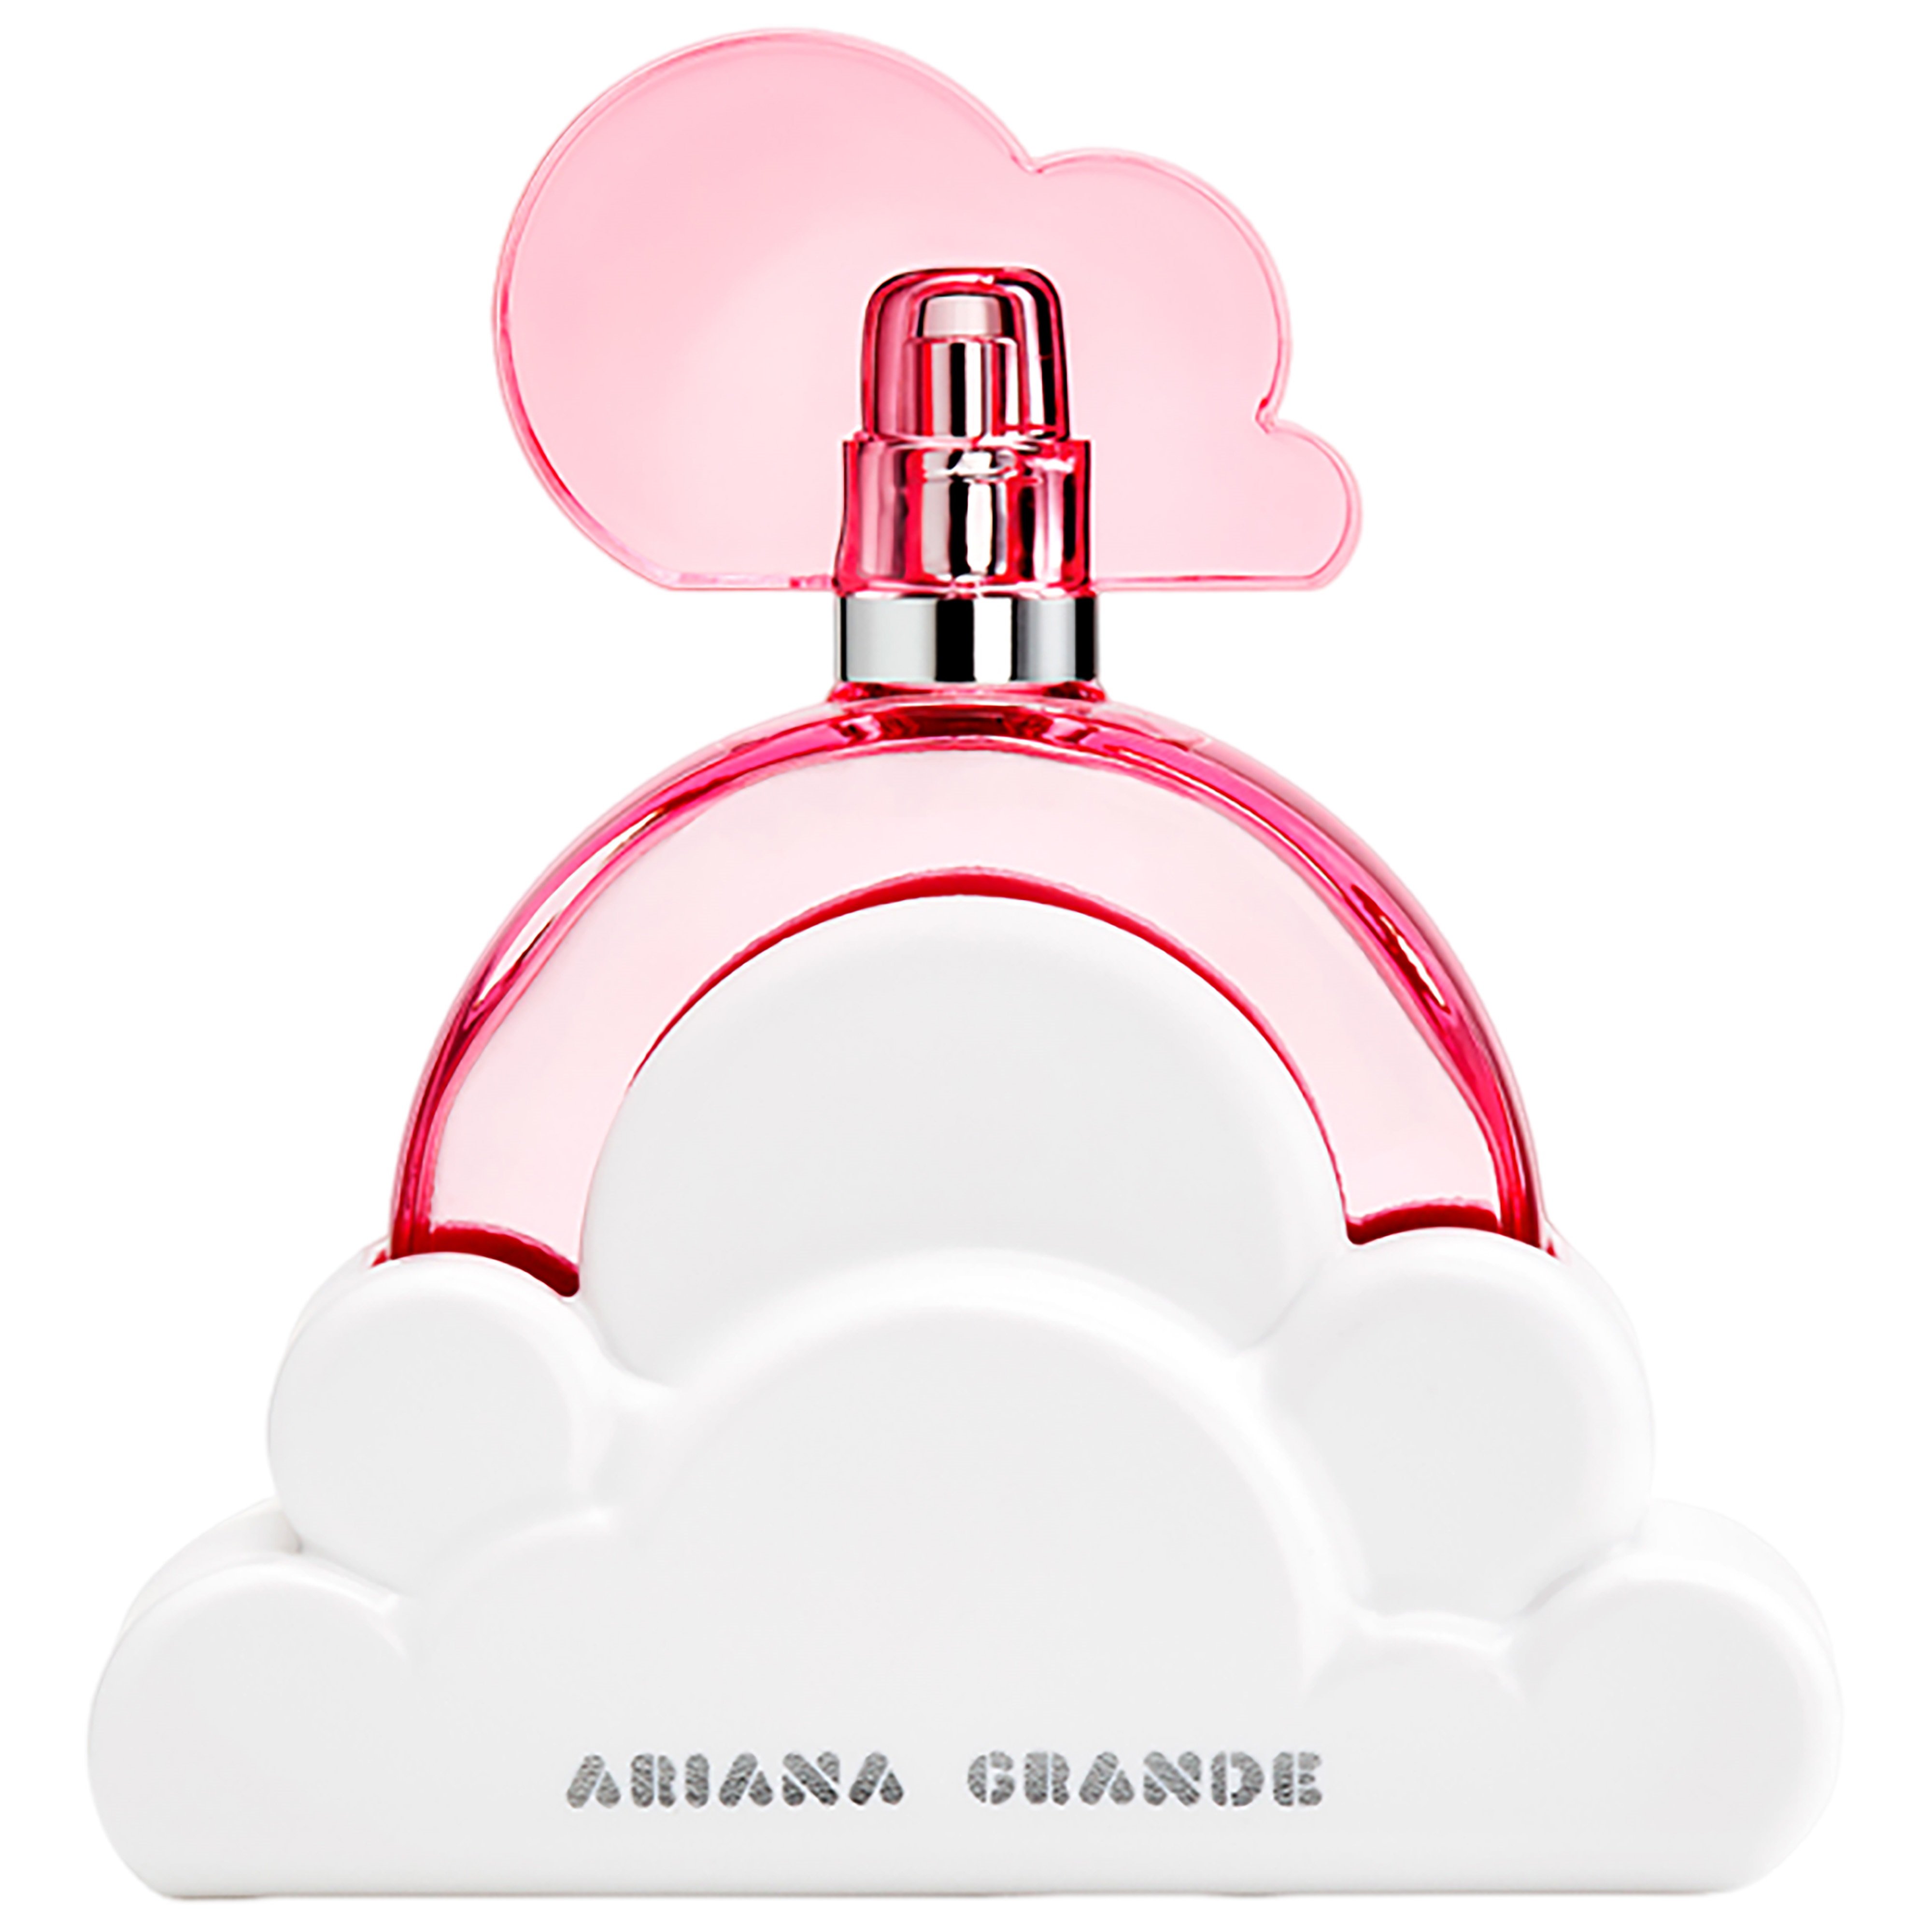 Ariana Grande - Cloud Pink EDP 100 ml